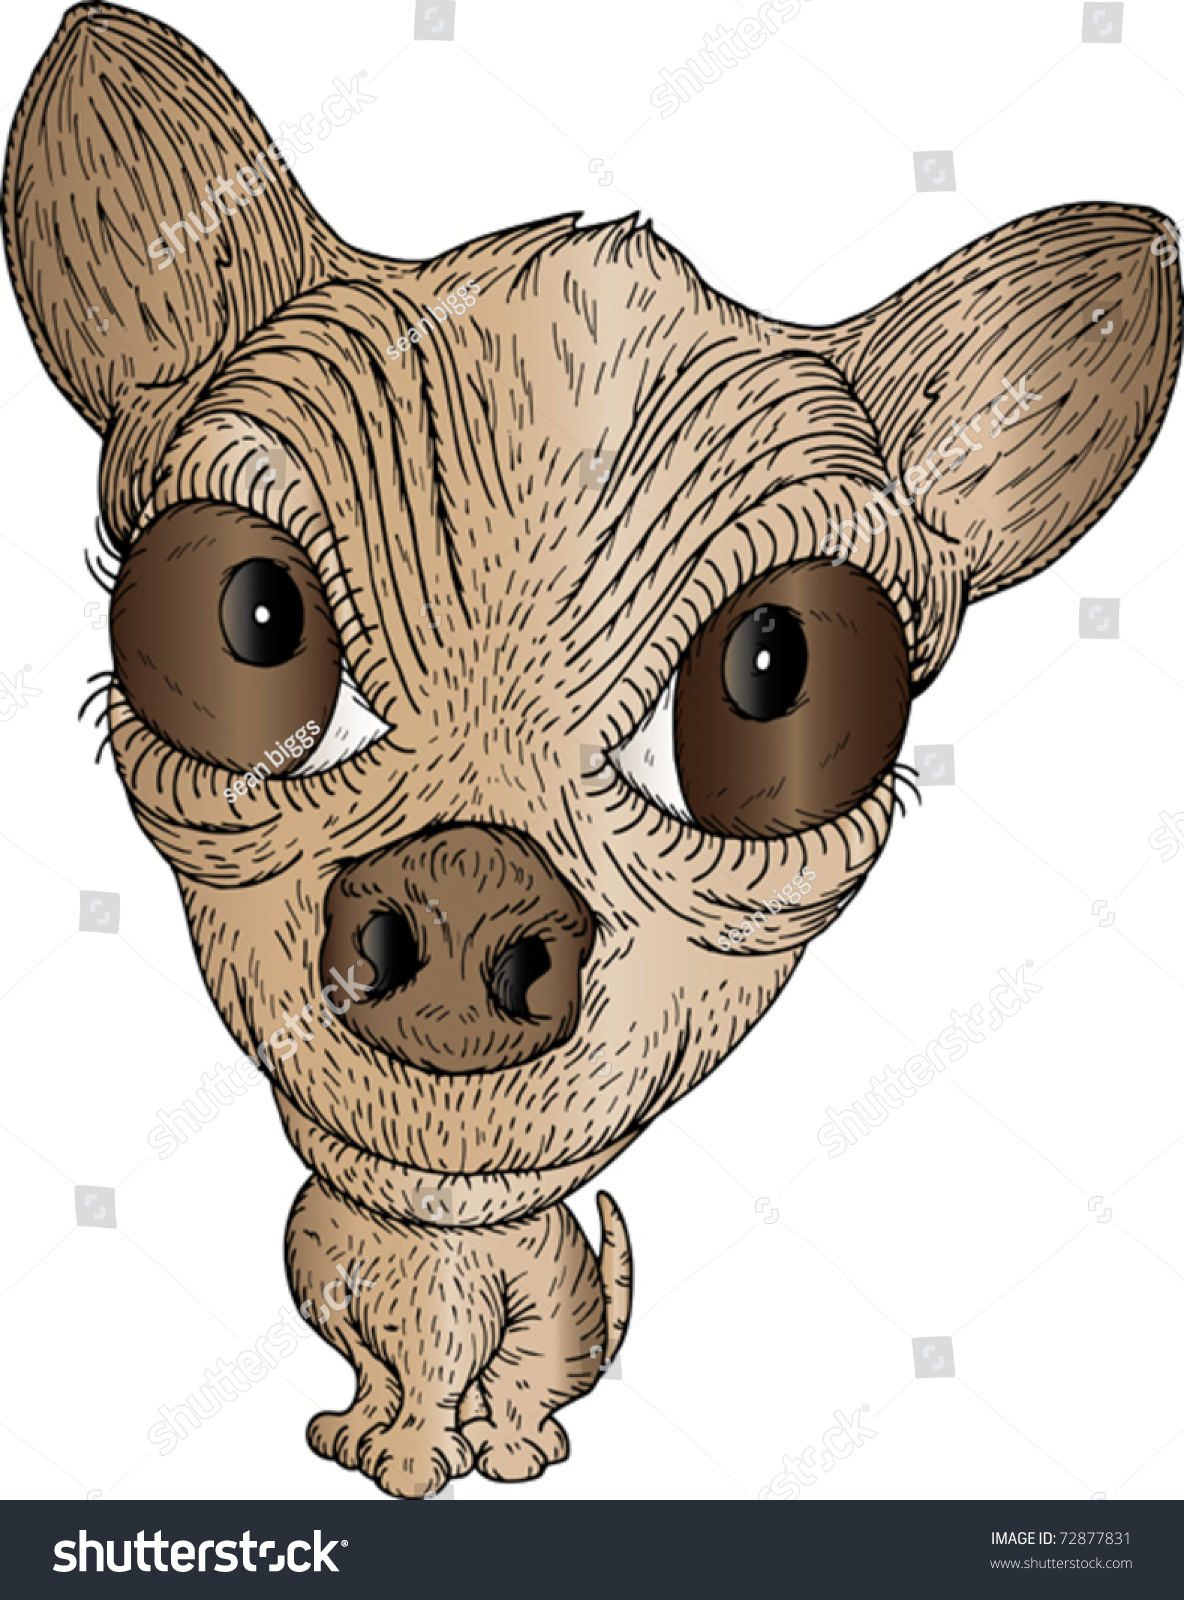 Vector Illustration Of A Cartoon Chihuahua - 72877831 : Shutterstock